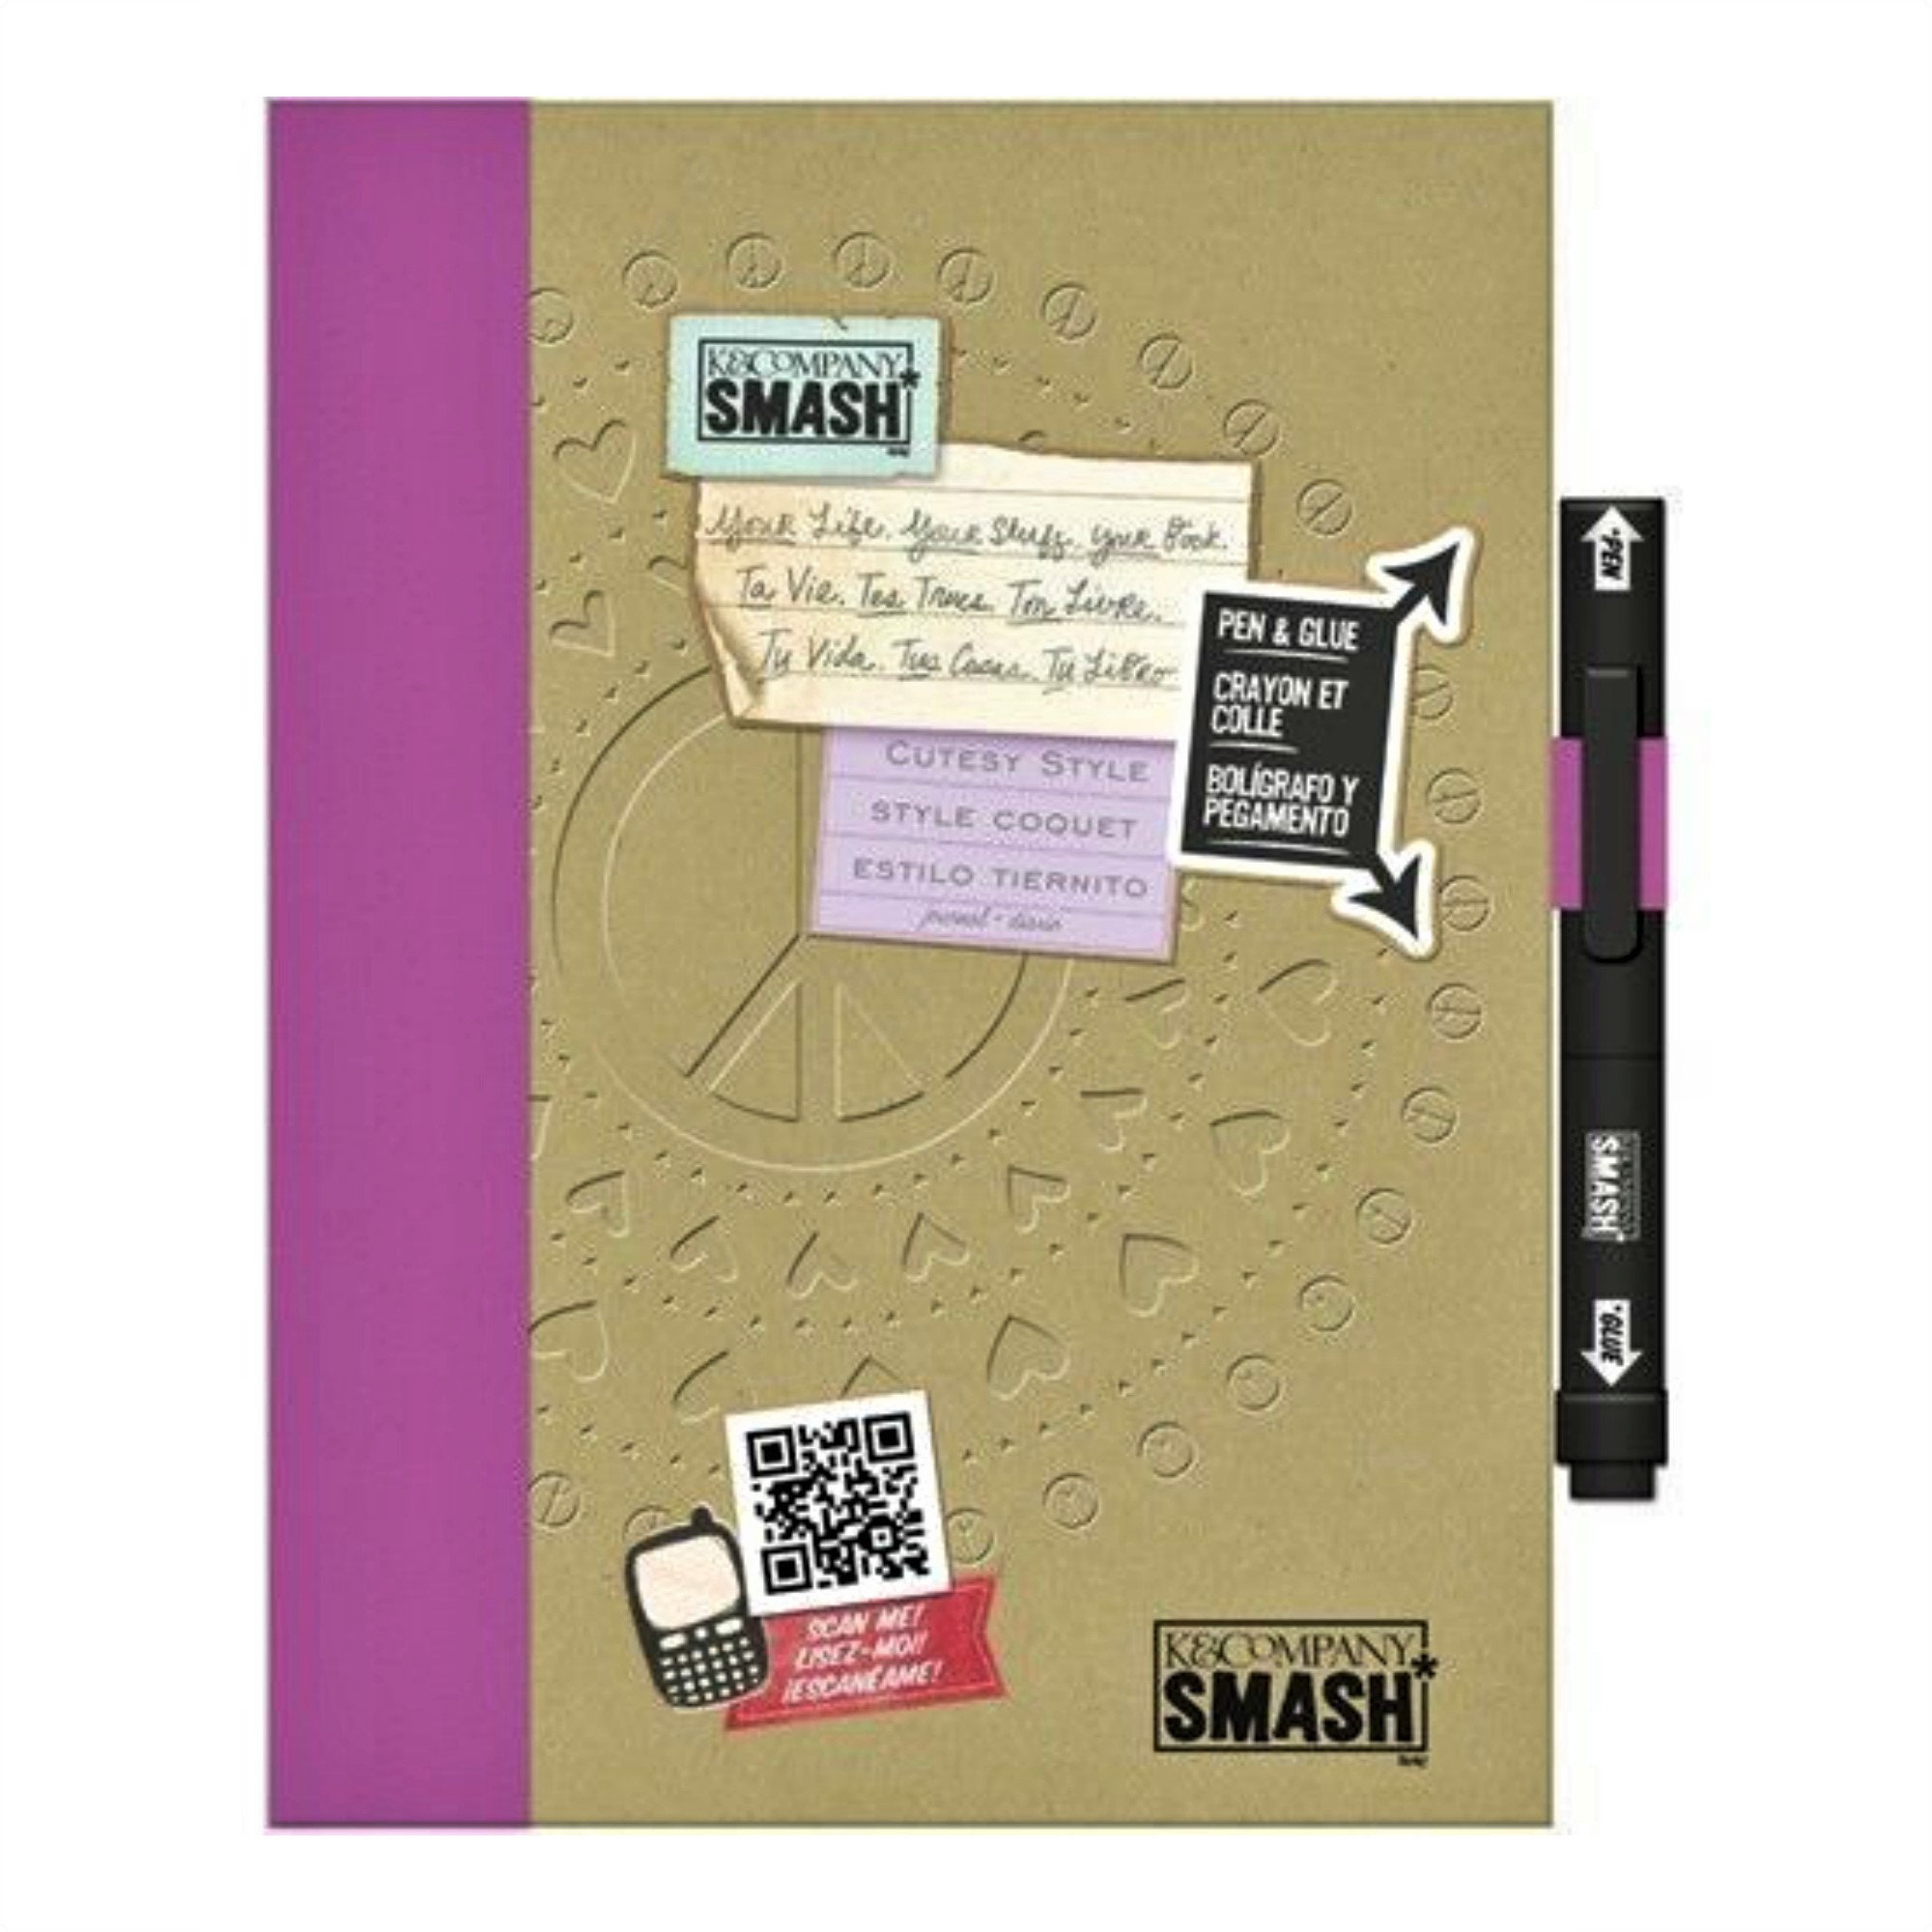 K & Company Smash Book Journal Scrapbook Notebook